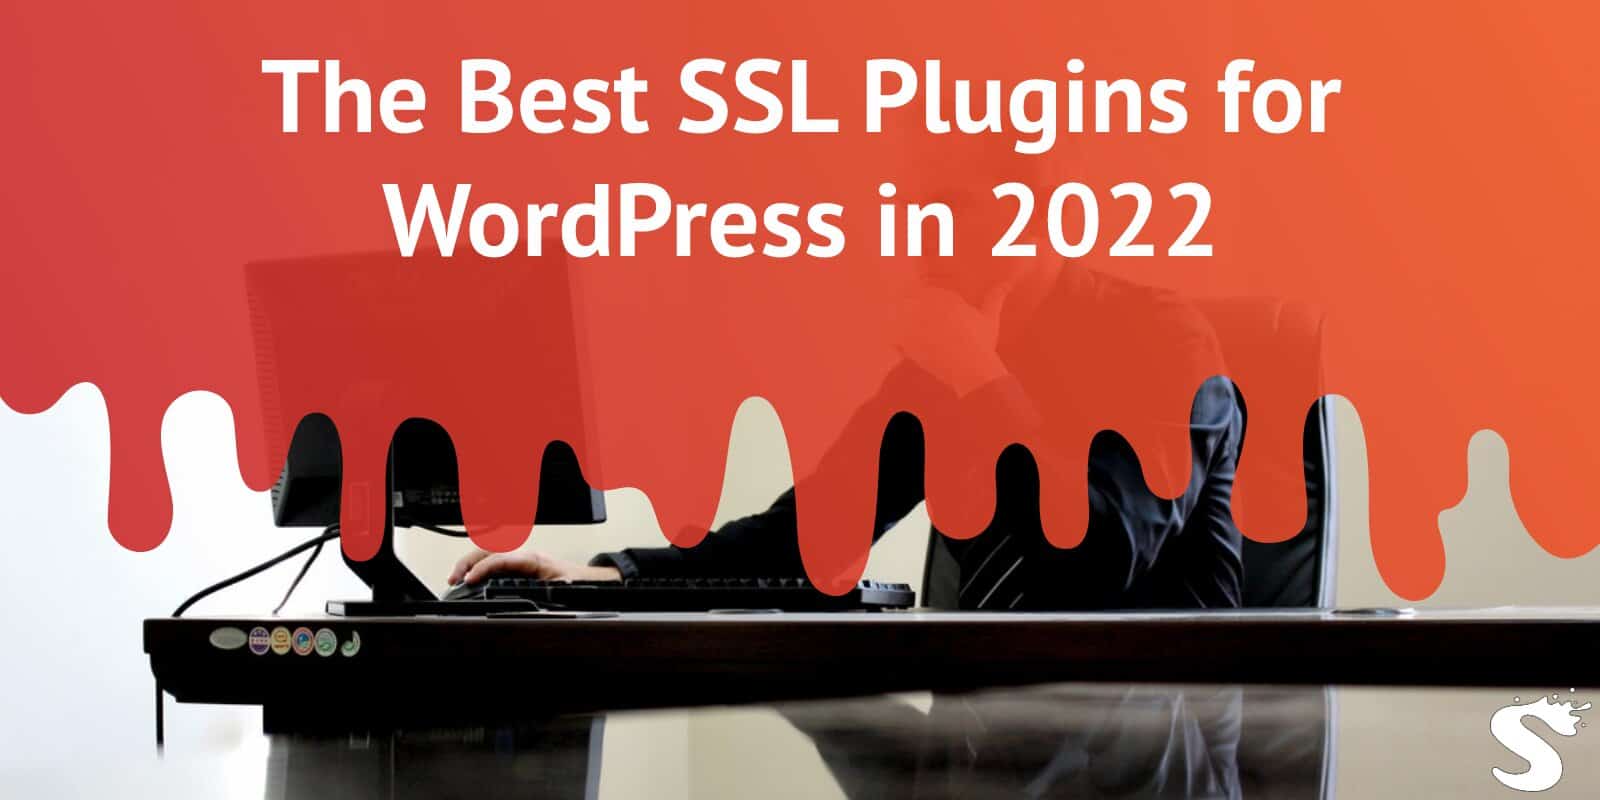 The Best SSL Plugins for WordPress in 2022